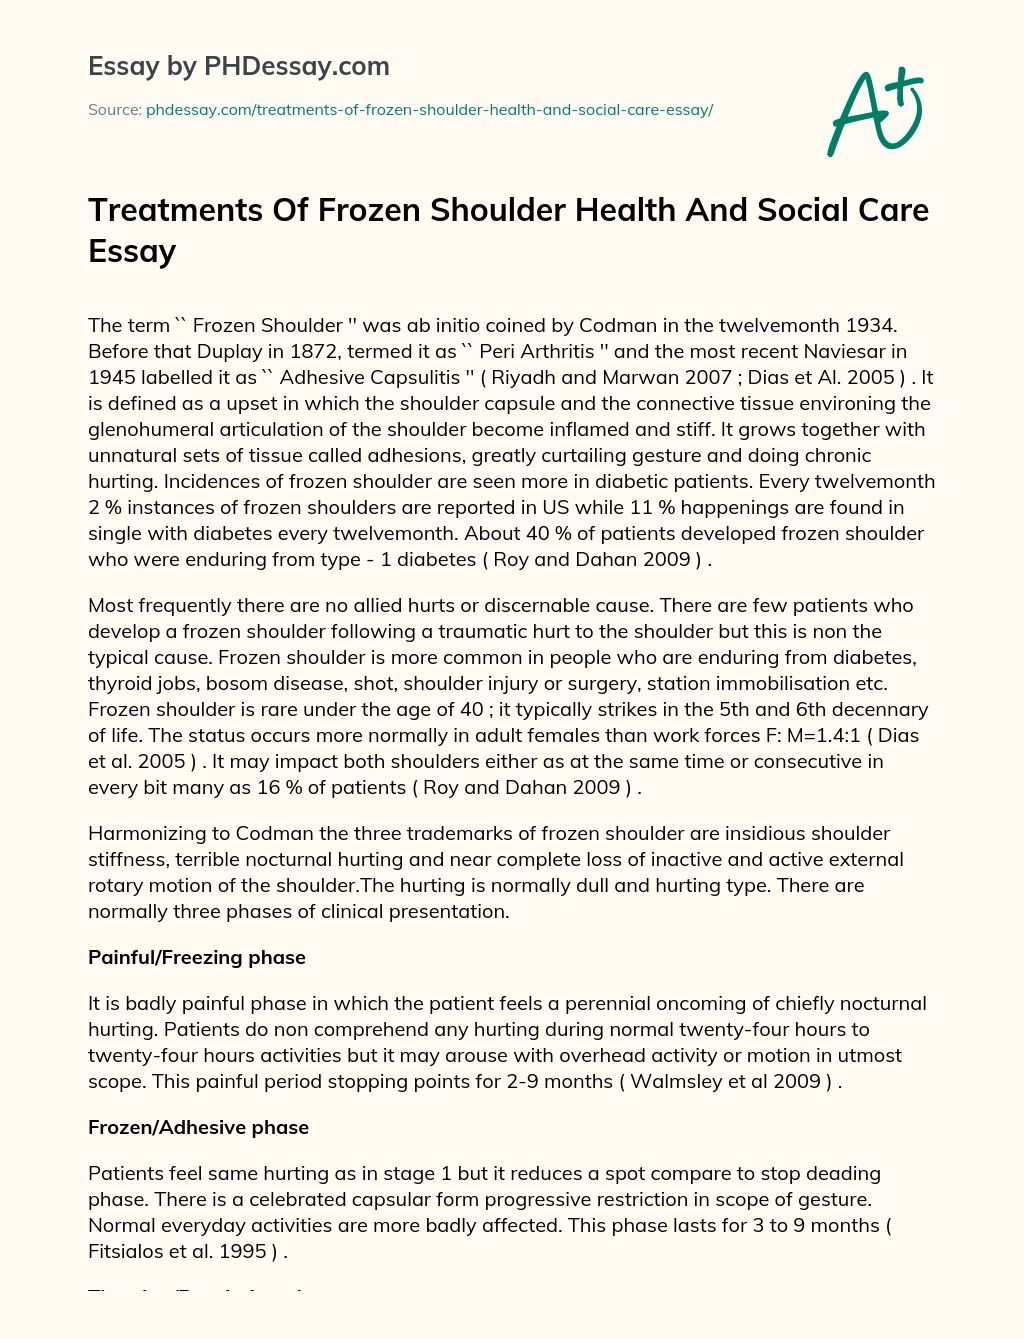 Treatments Of Frozen Shoulder Health And Social Care Essay essay